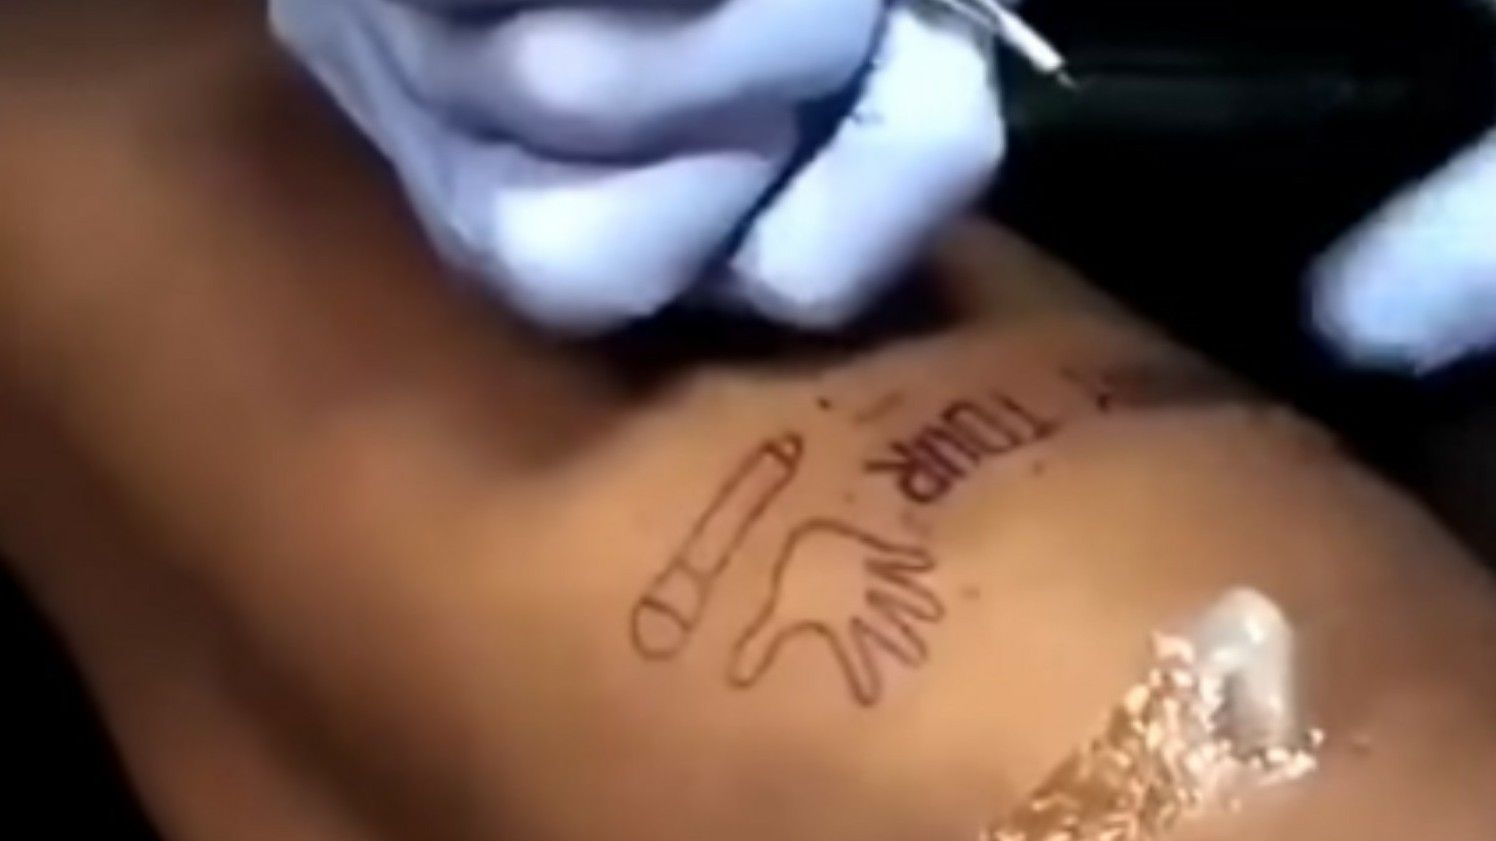 Steve Aoki on Instagram Wowwww Still blows my mind when I see Aoki  tattoos Amazing job fiistattoo